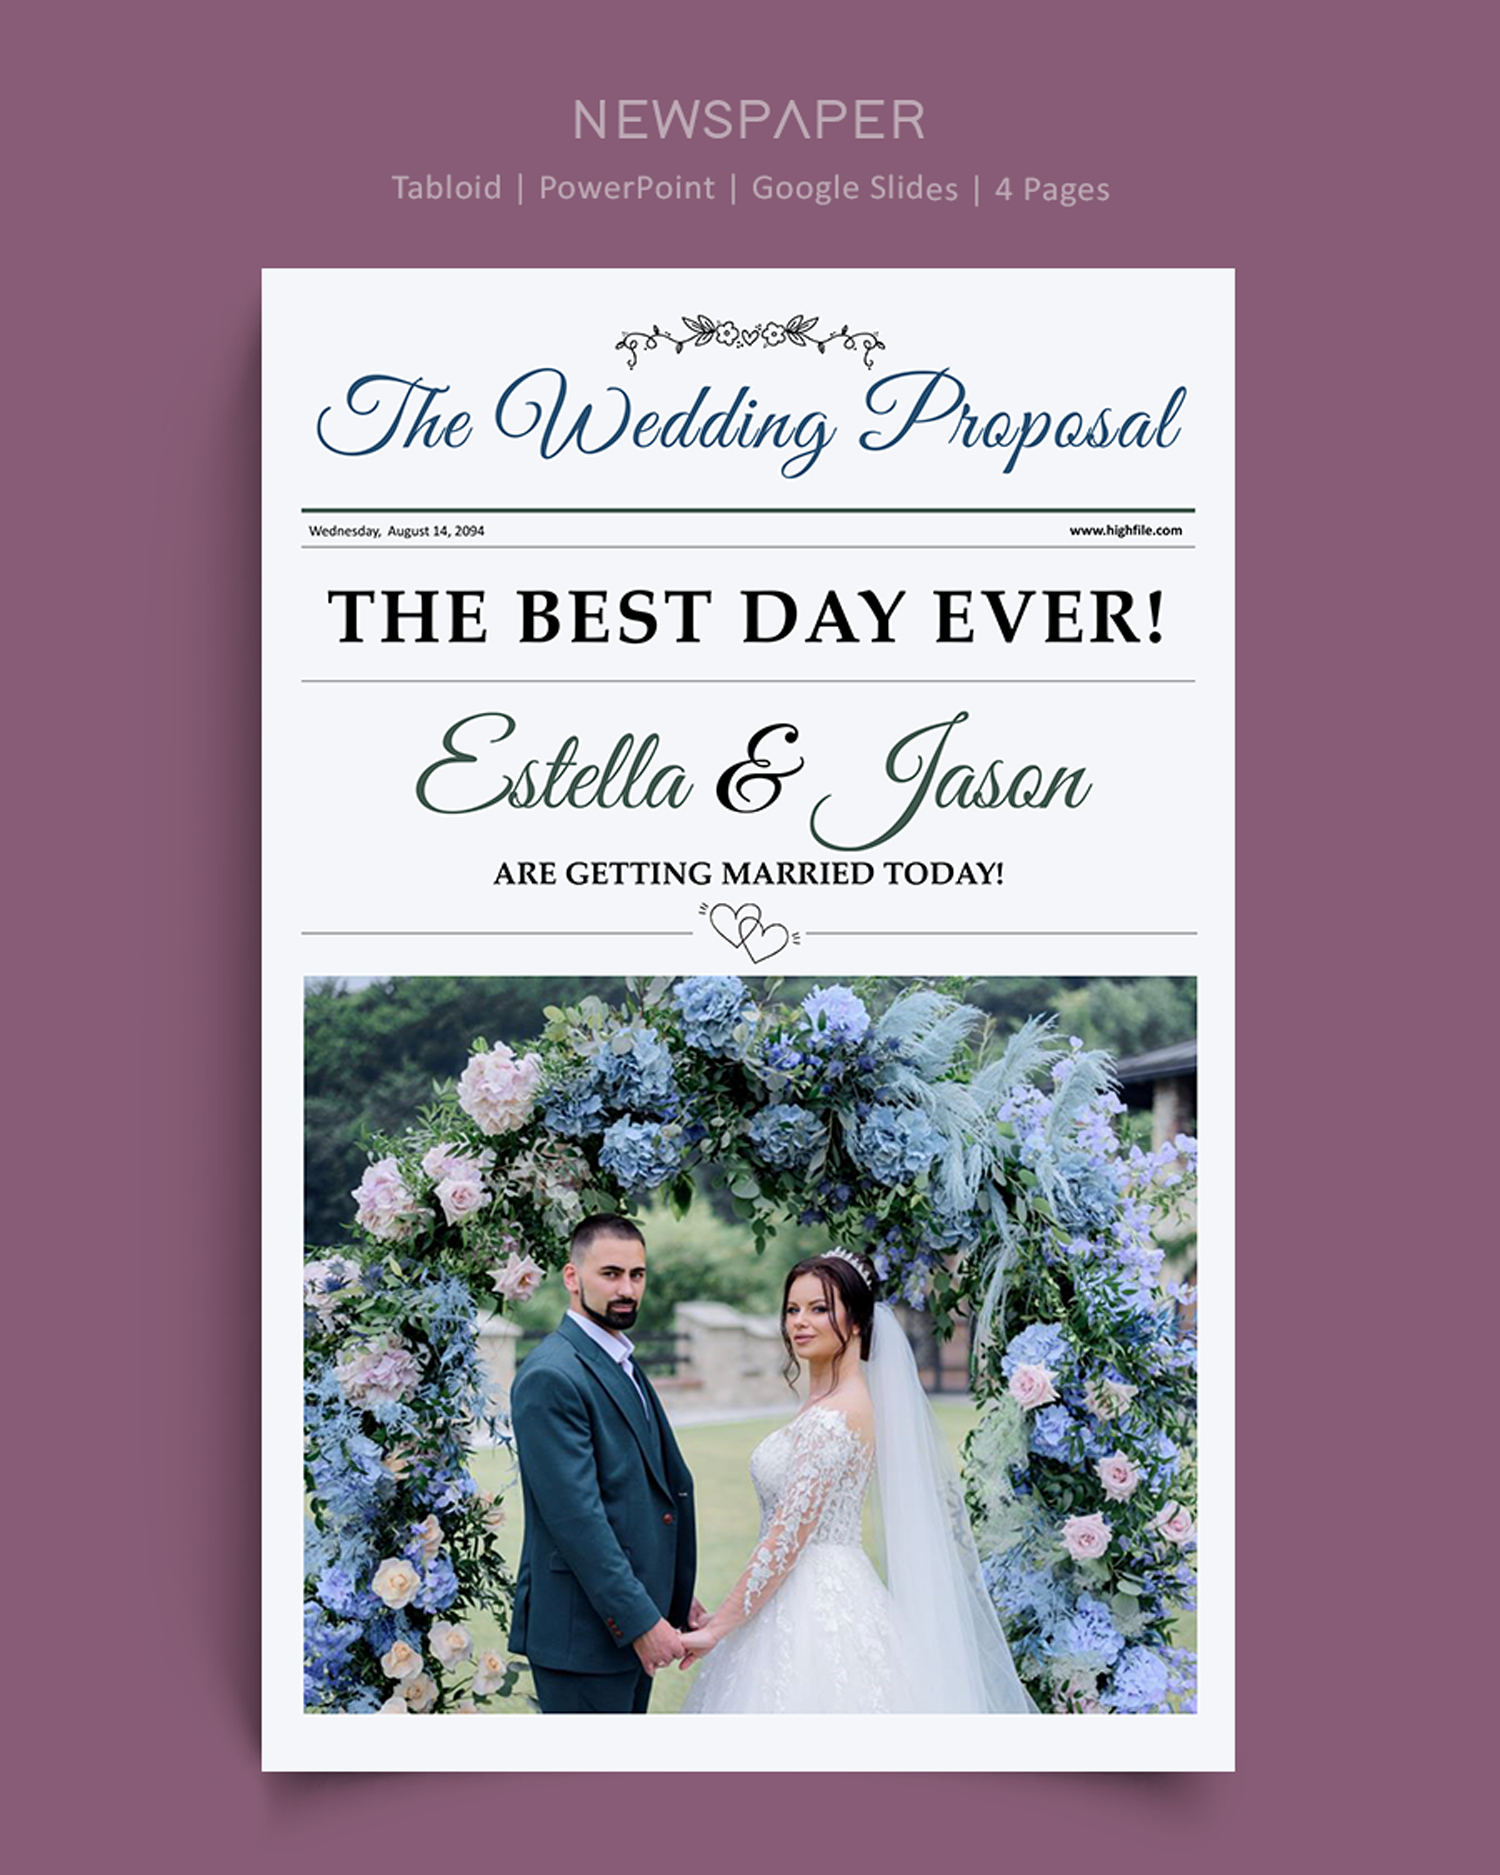 Tabloid Wedding Program Newspaper Template - PowerPoint, Google Slides